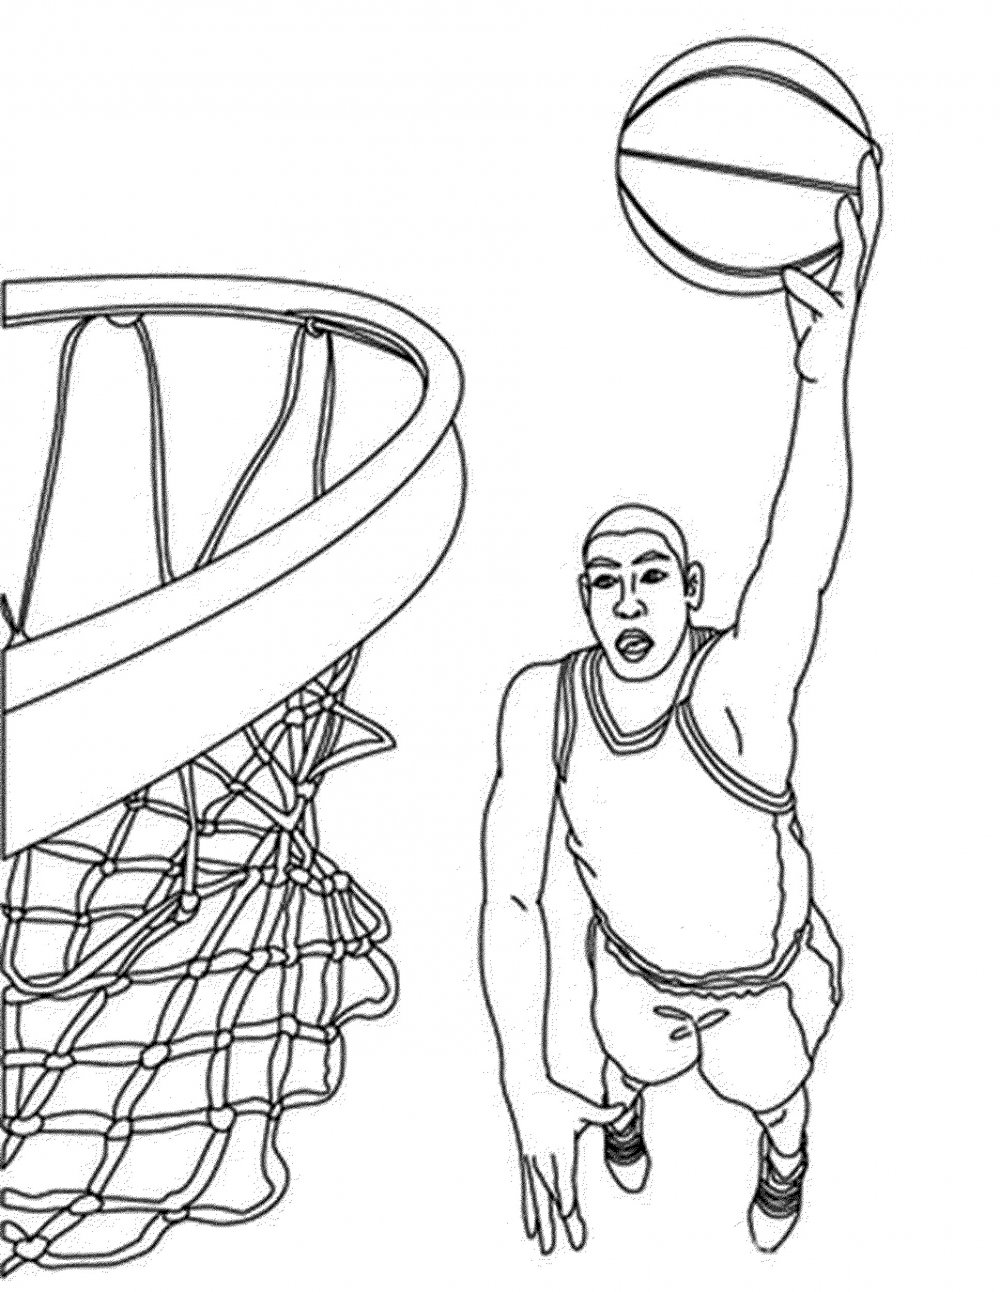 Джордан баскетболист раскраска